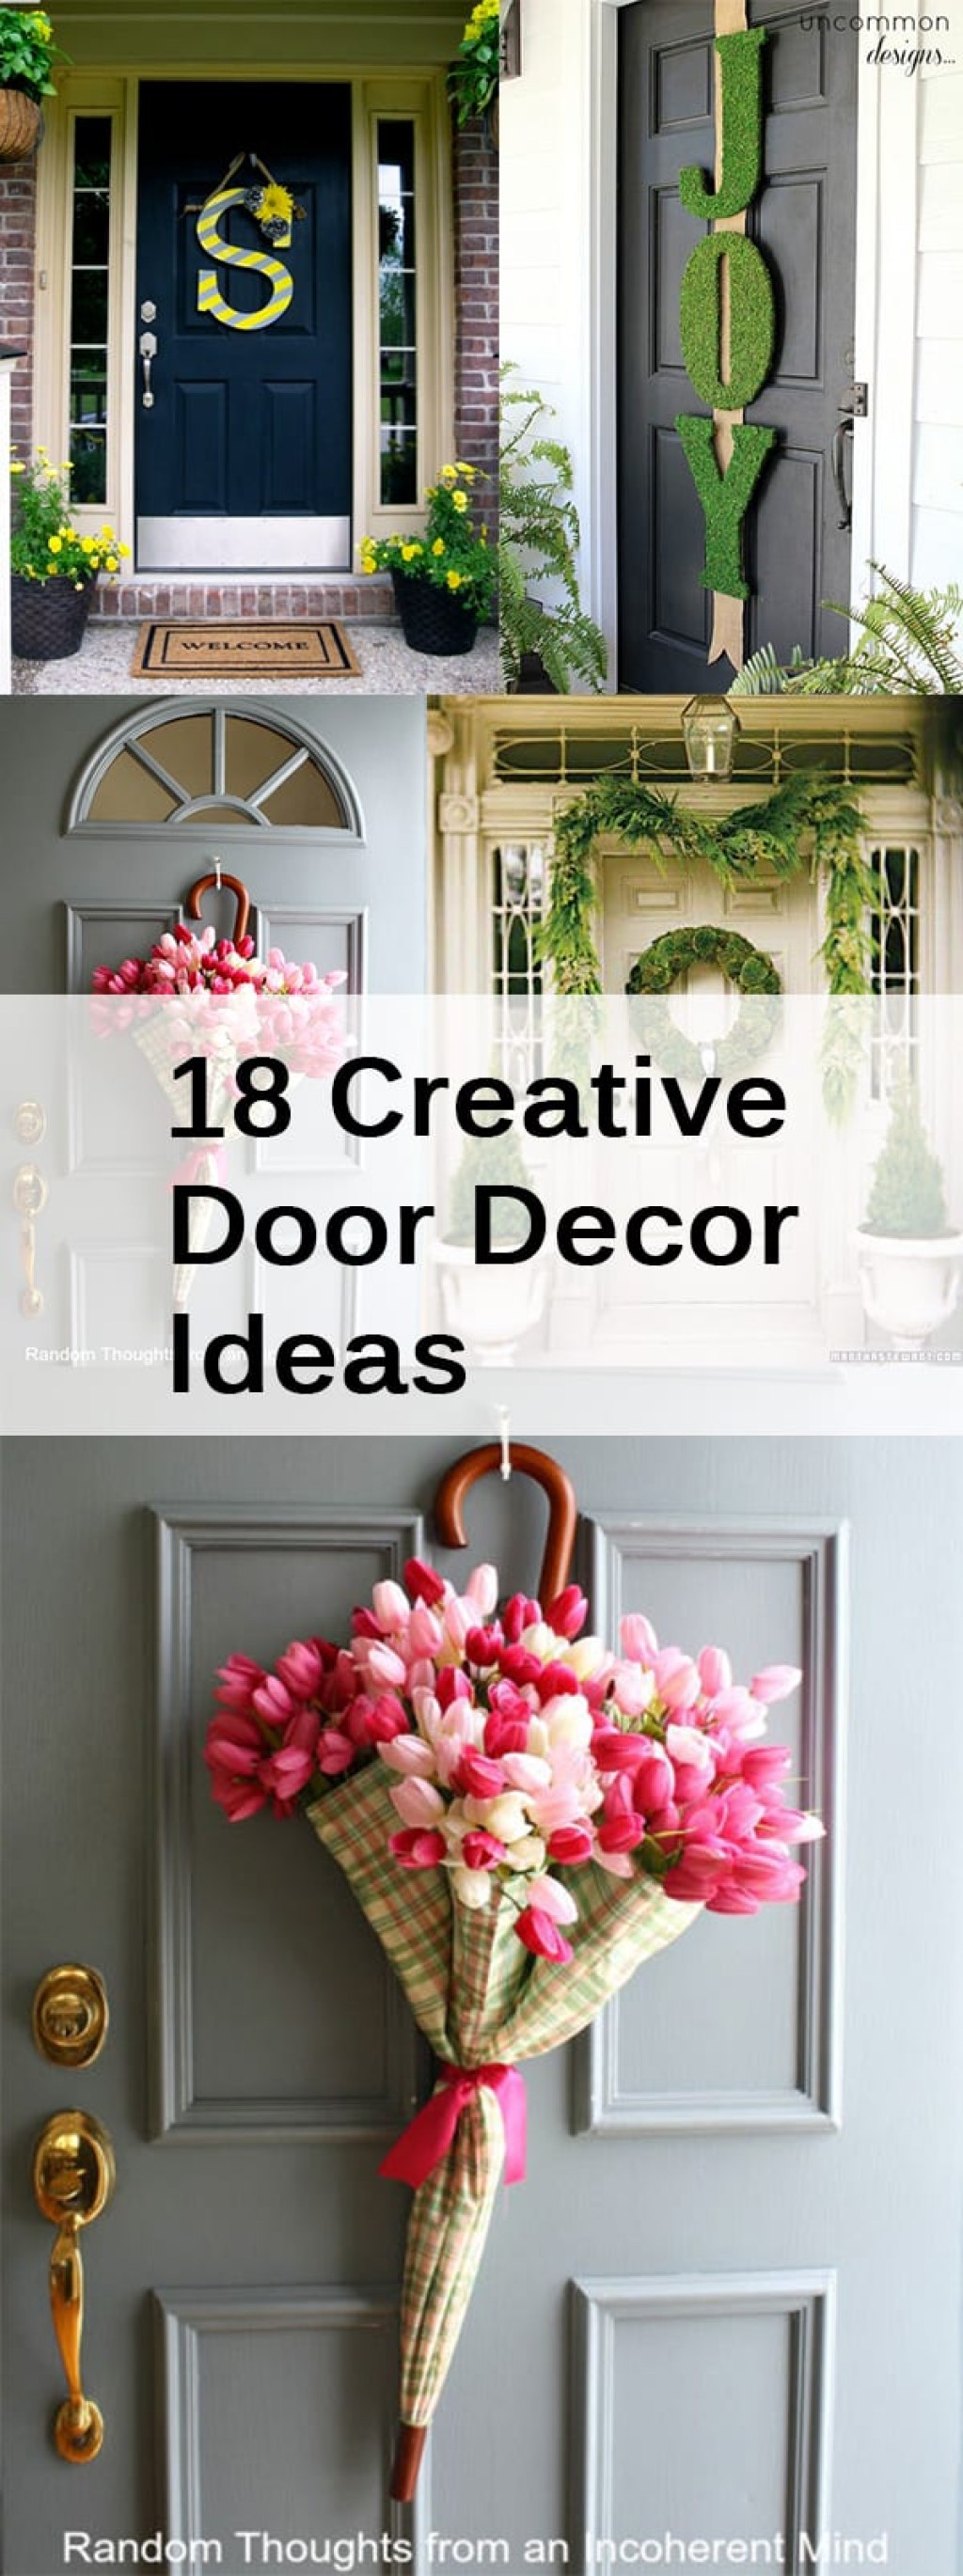 creative entrance decor ideas - Creative Door Decor Ideas  How To Build It